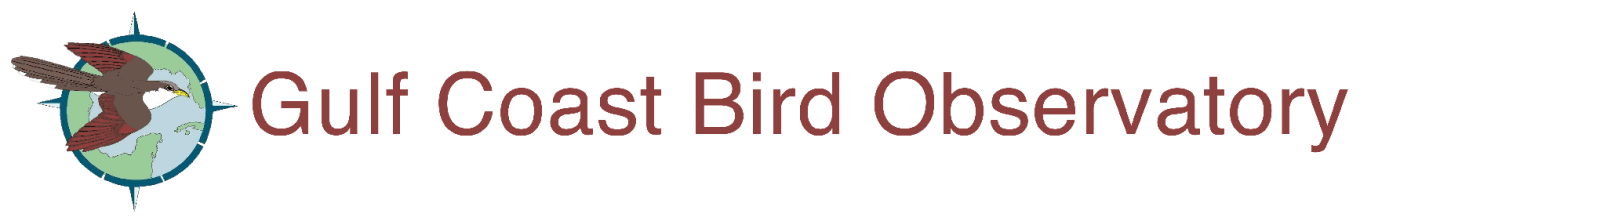 Gulf Coast Bird Observatory